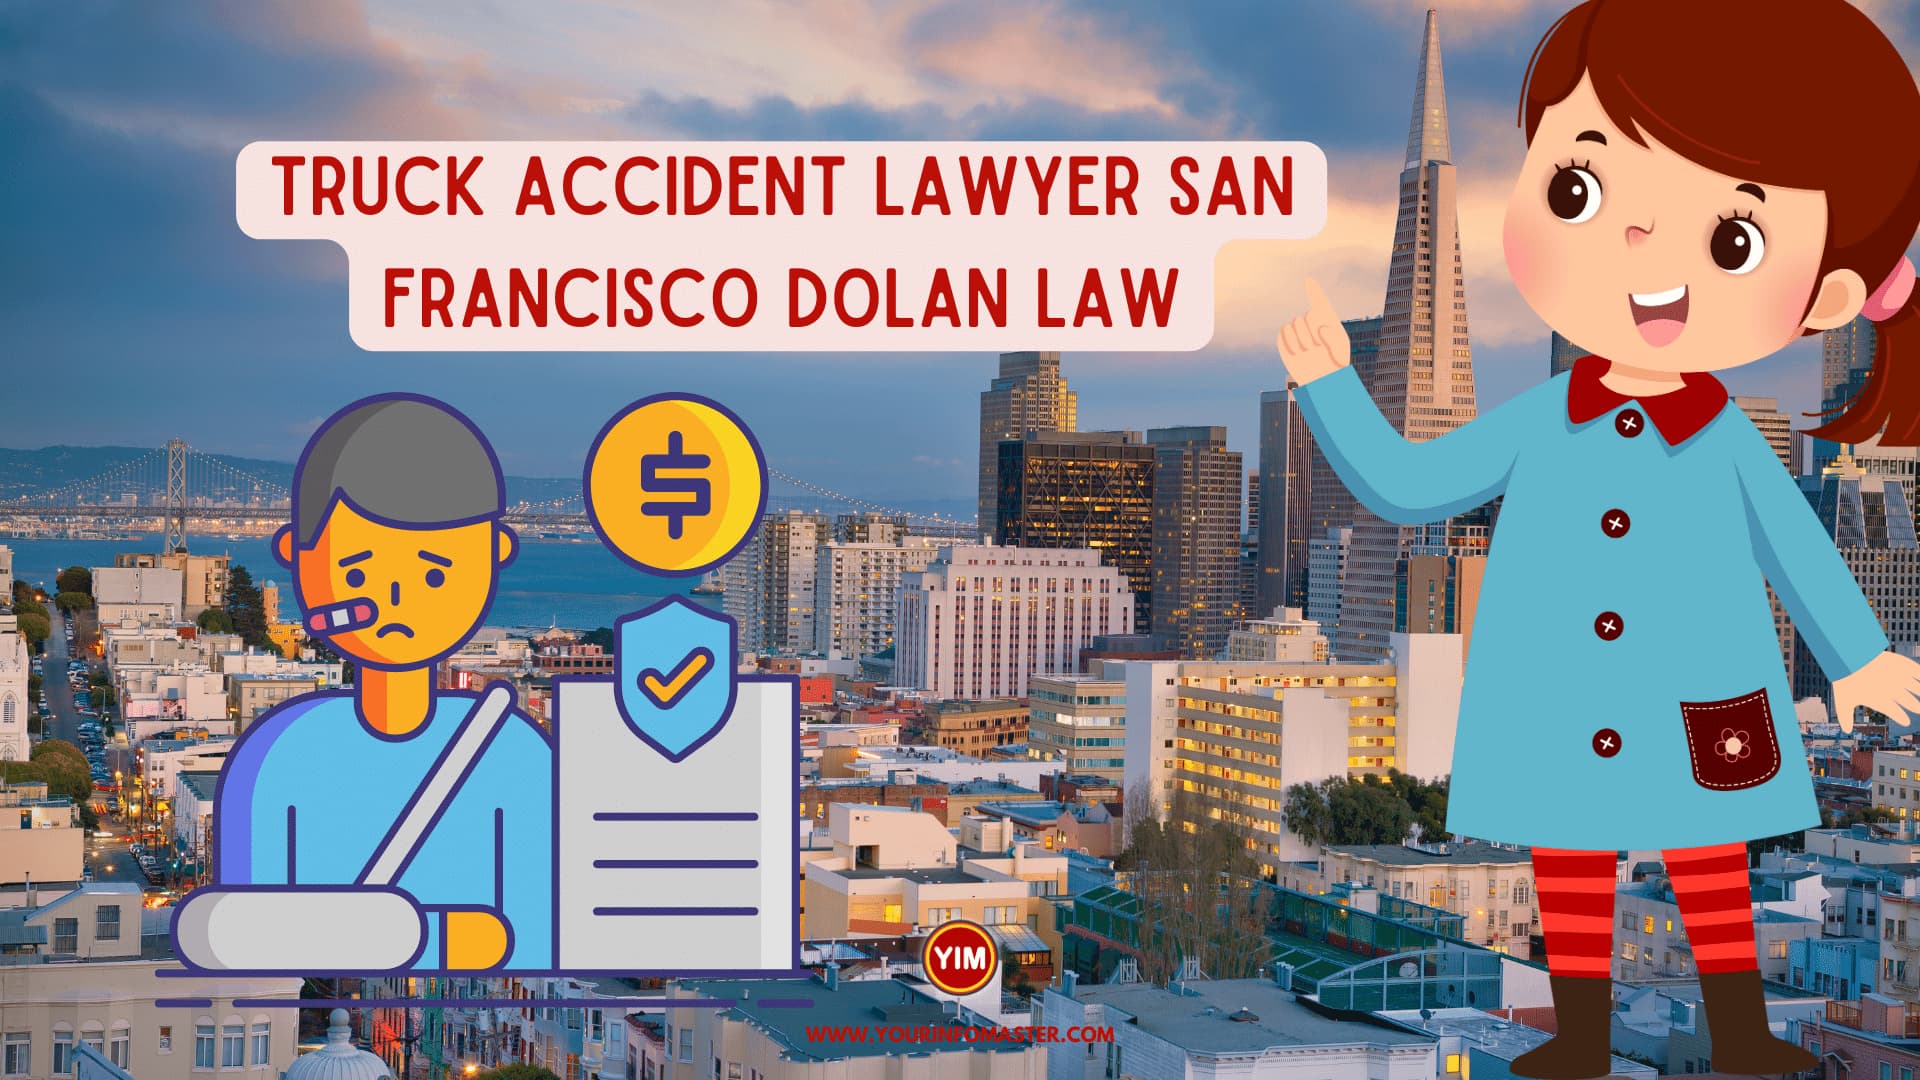 Truck accident lawyer San Francisco Dolan law